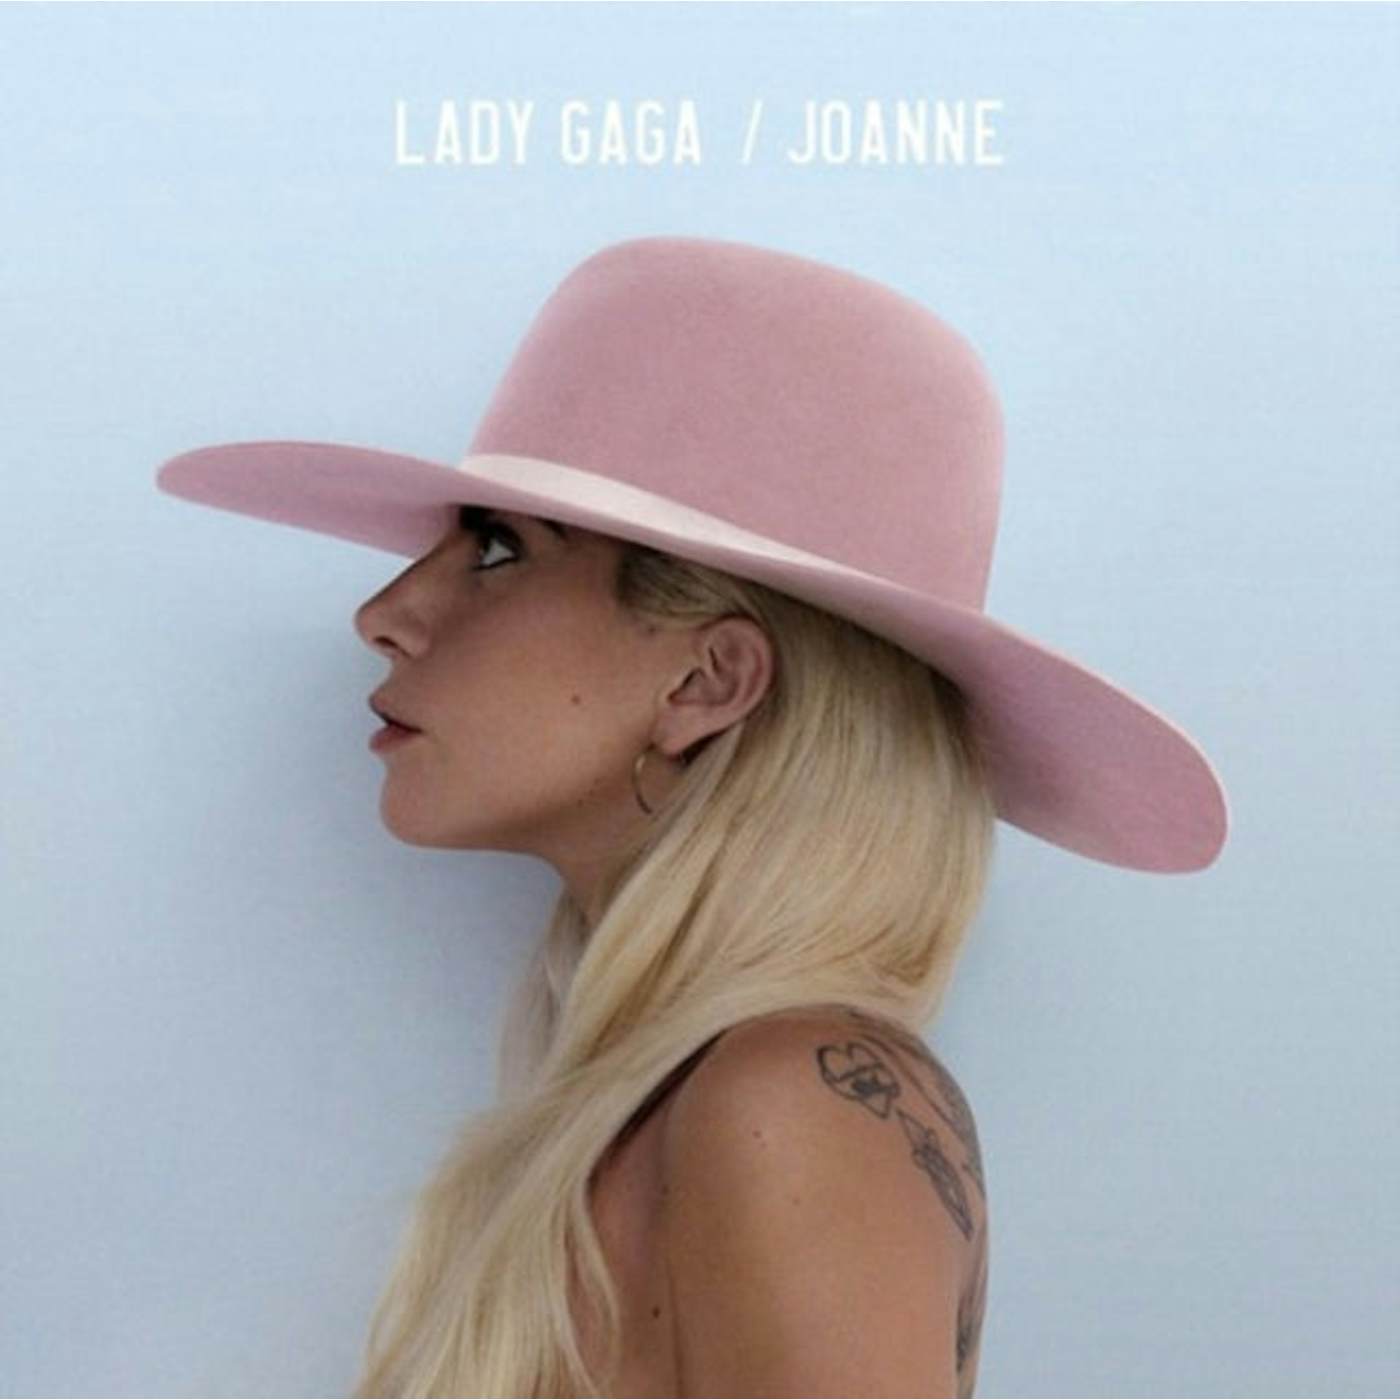 Lady Gaga LP Vinyl Record - Joanne